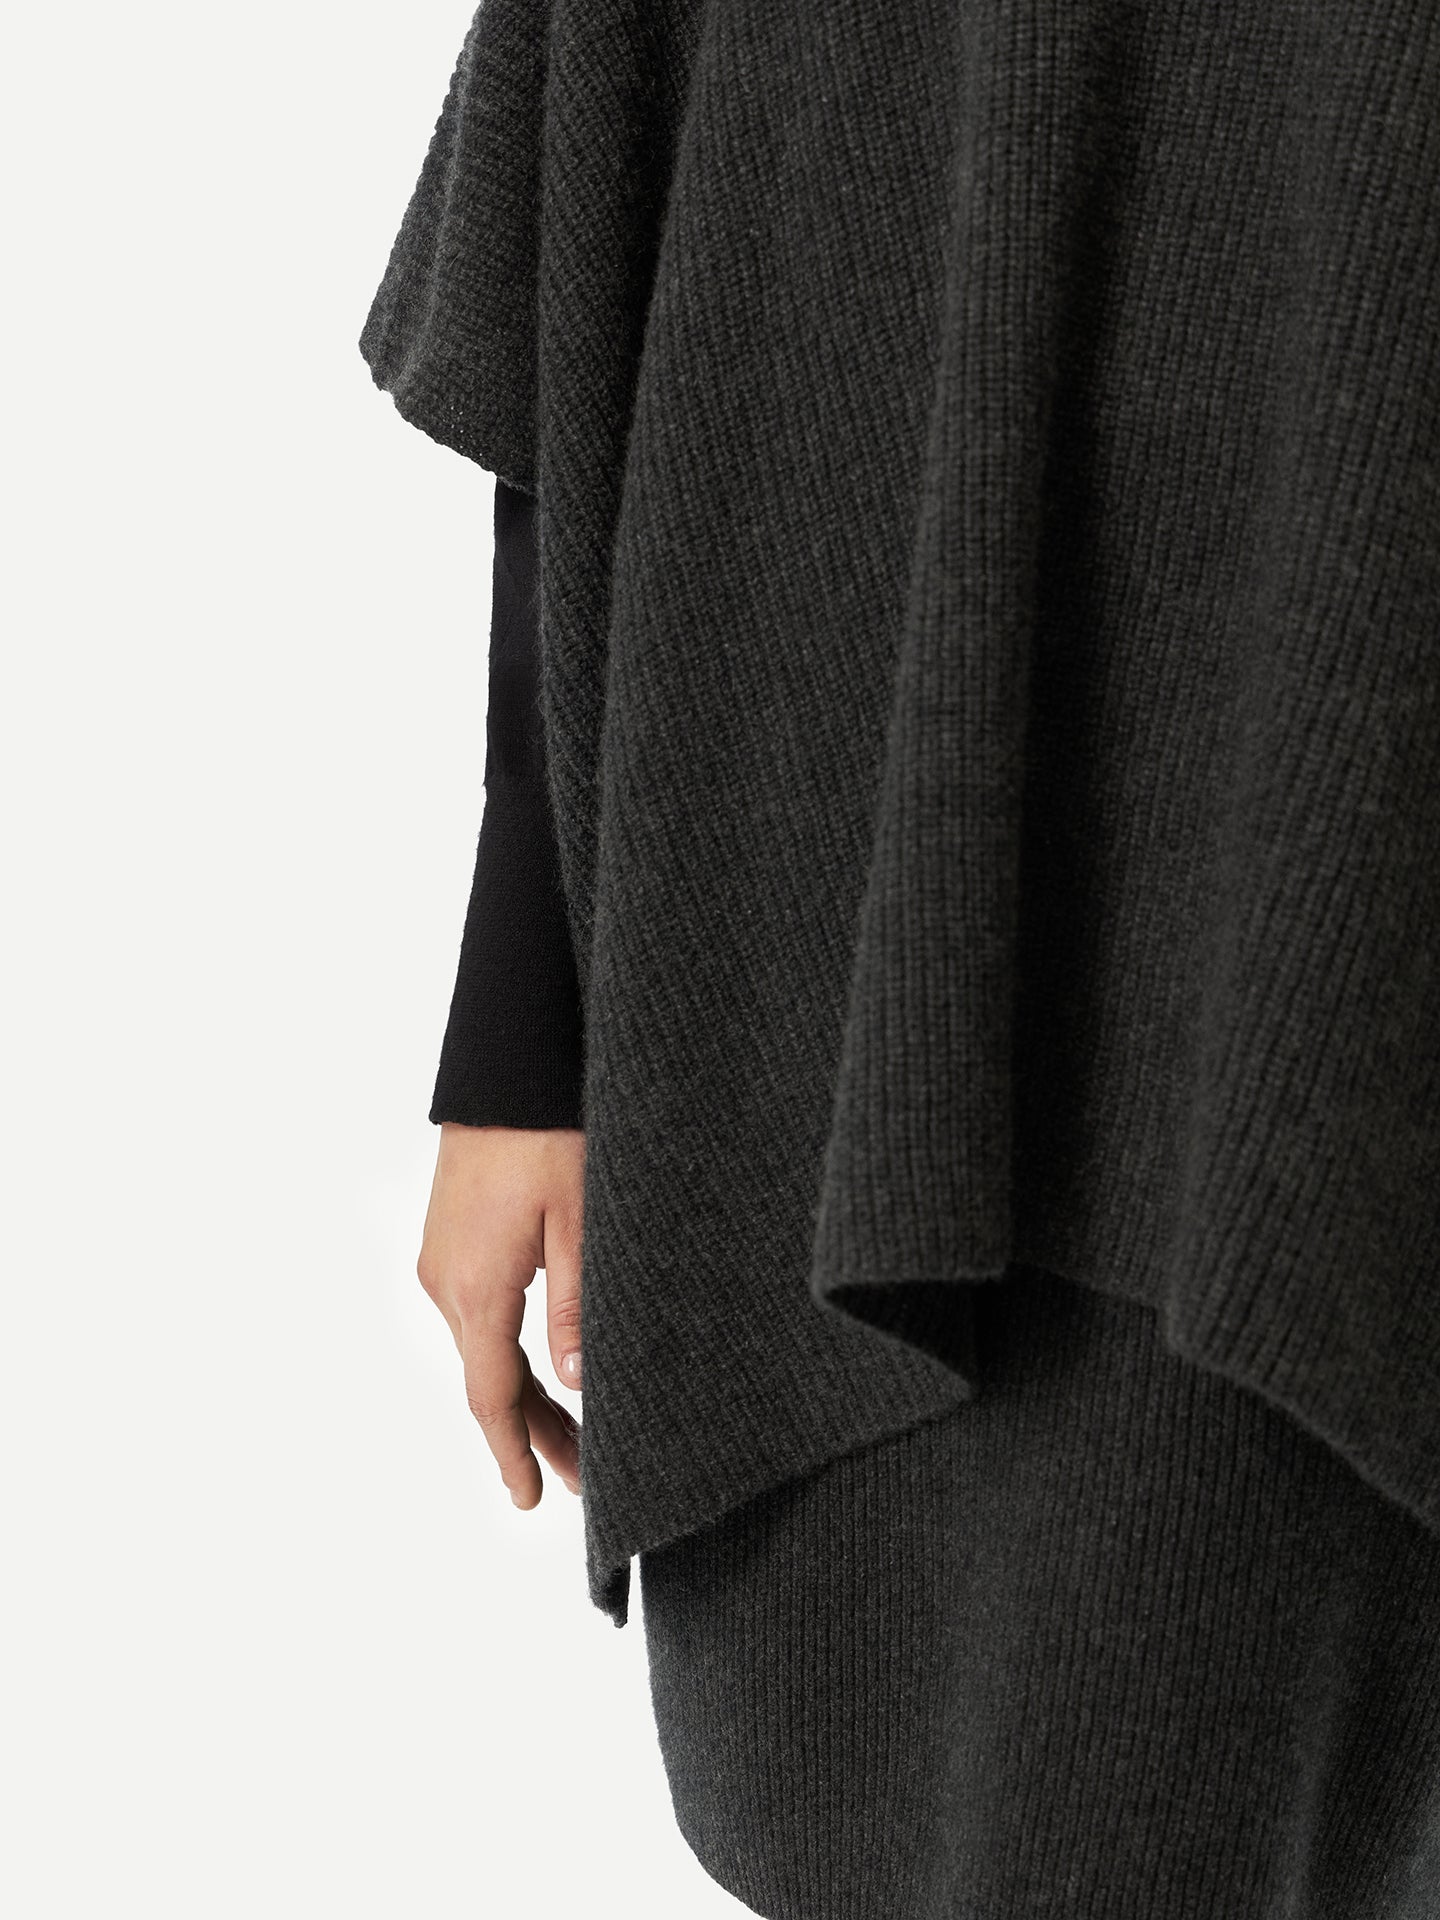 Women's Rib-Knit Cashmere Poncho Charcoal - Gobi Cashmere